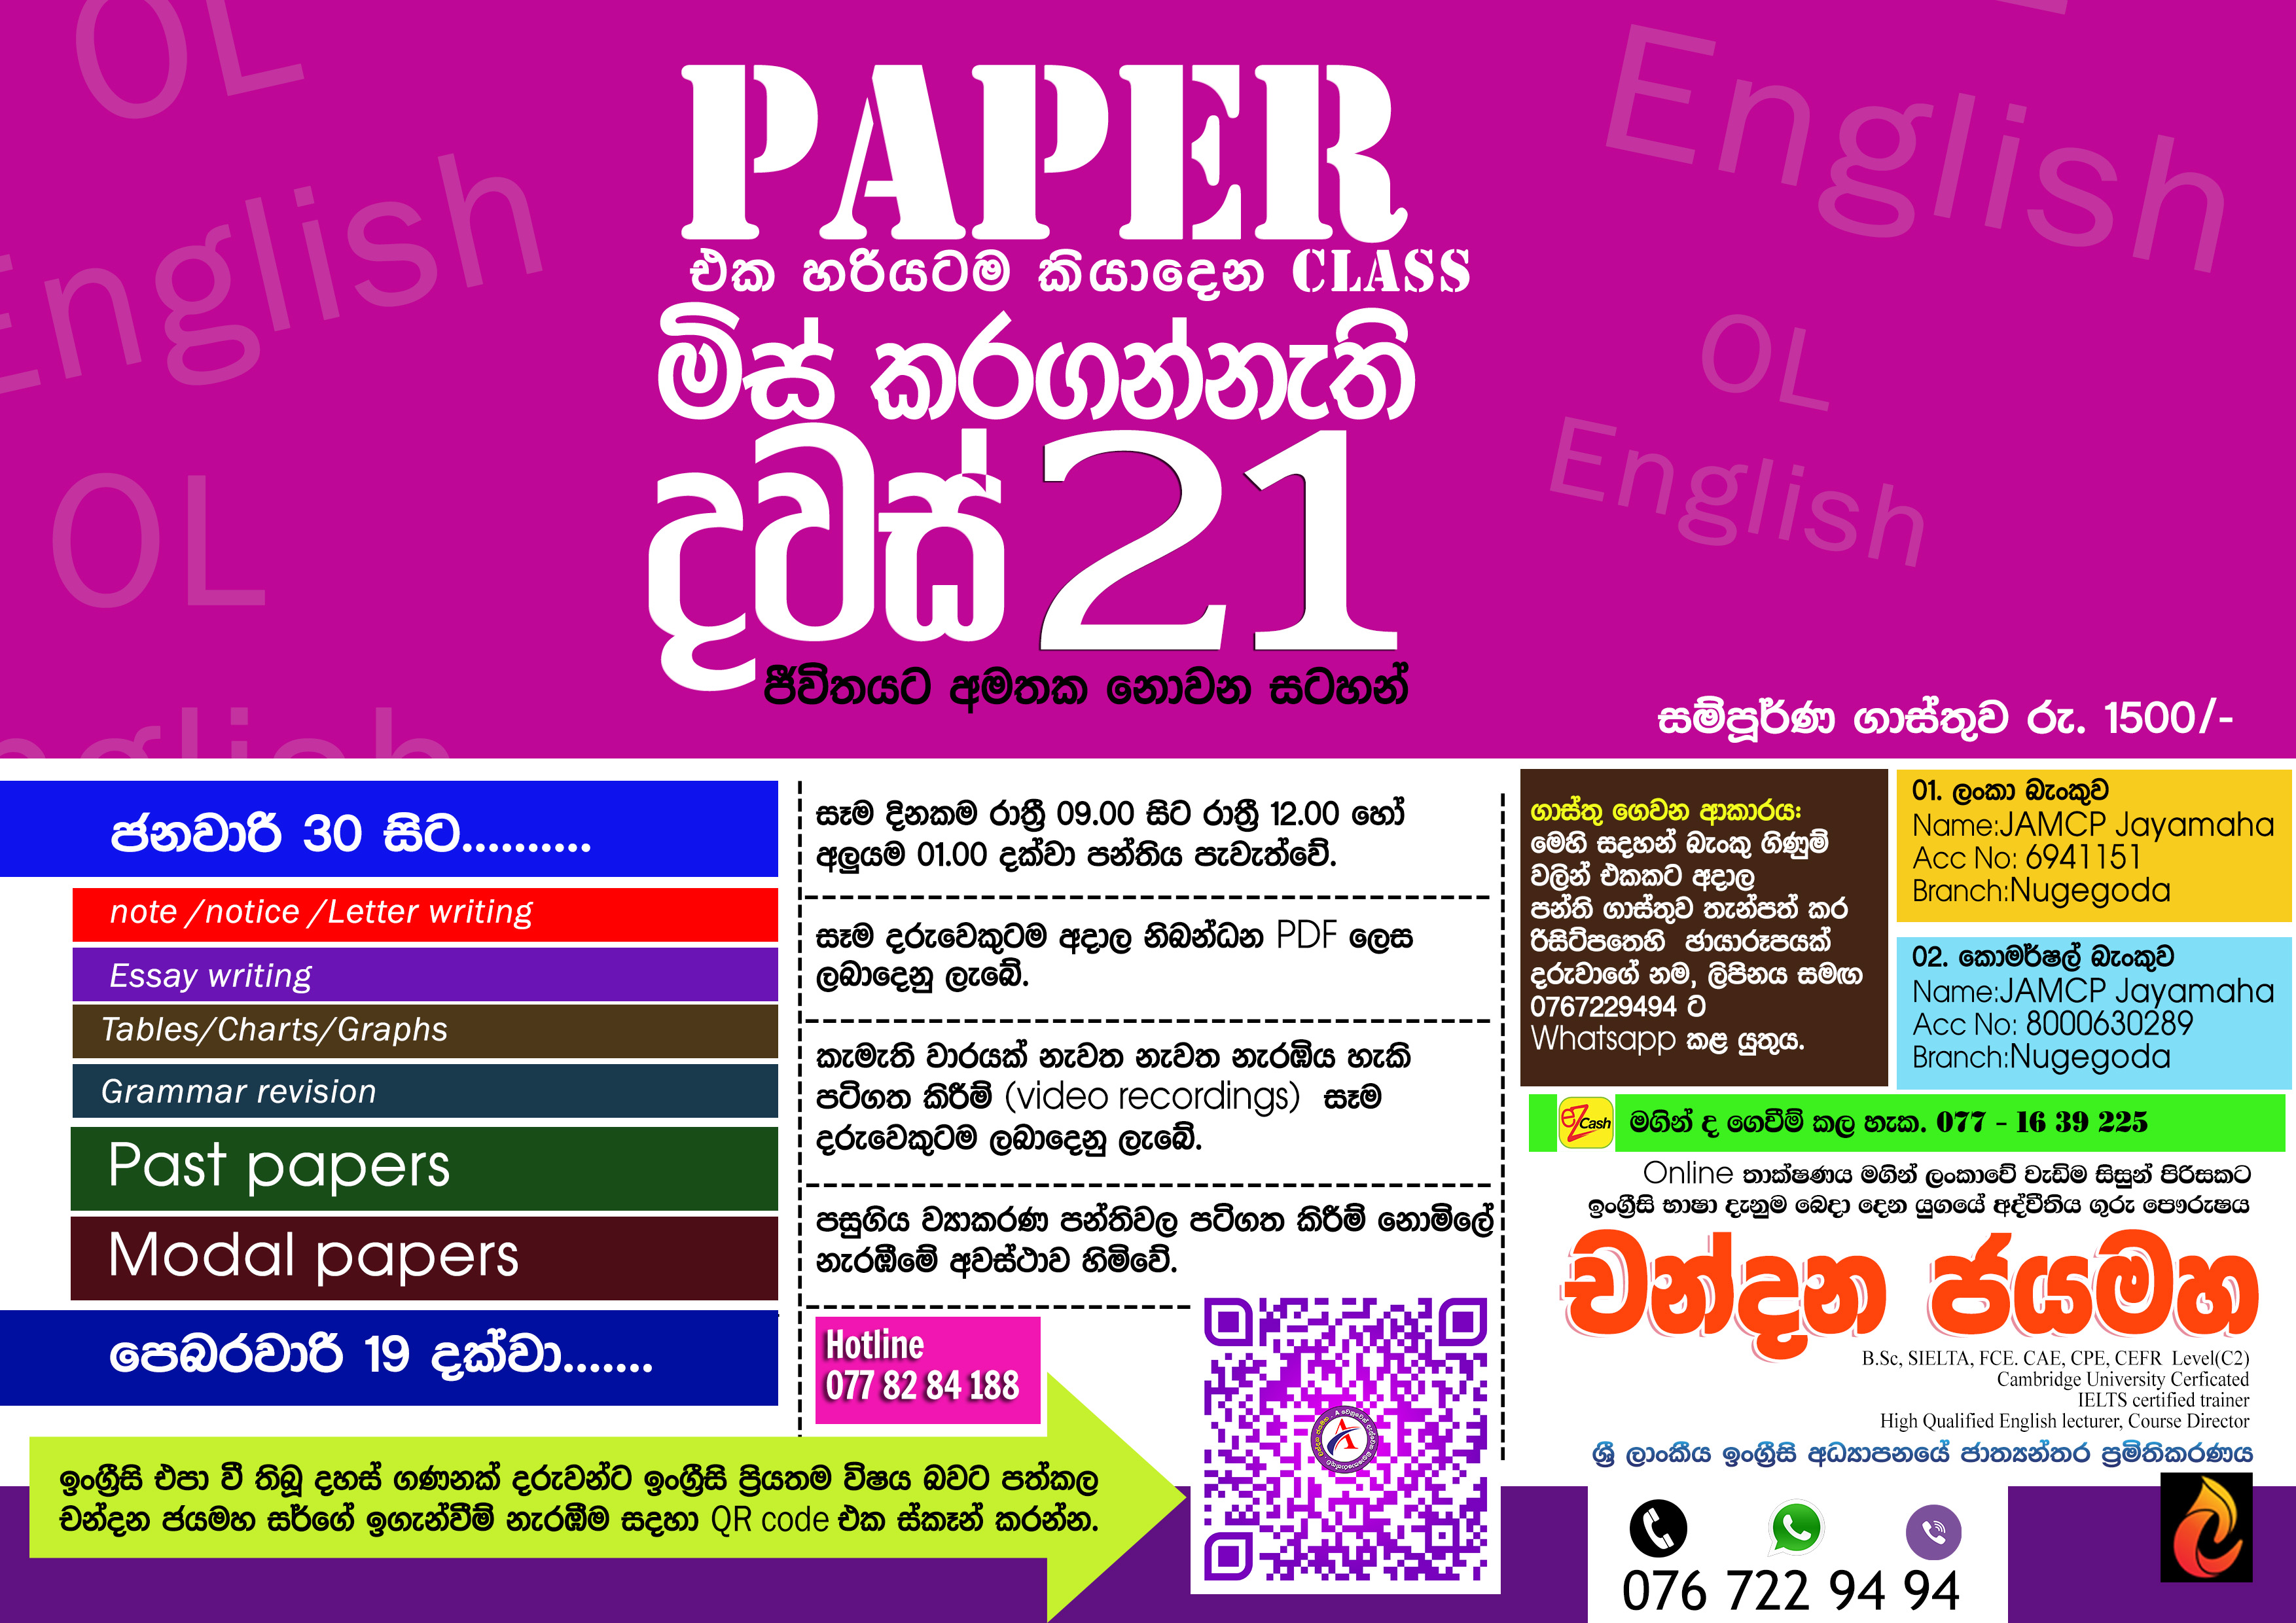 OL English 21 Days Paper class